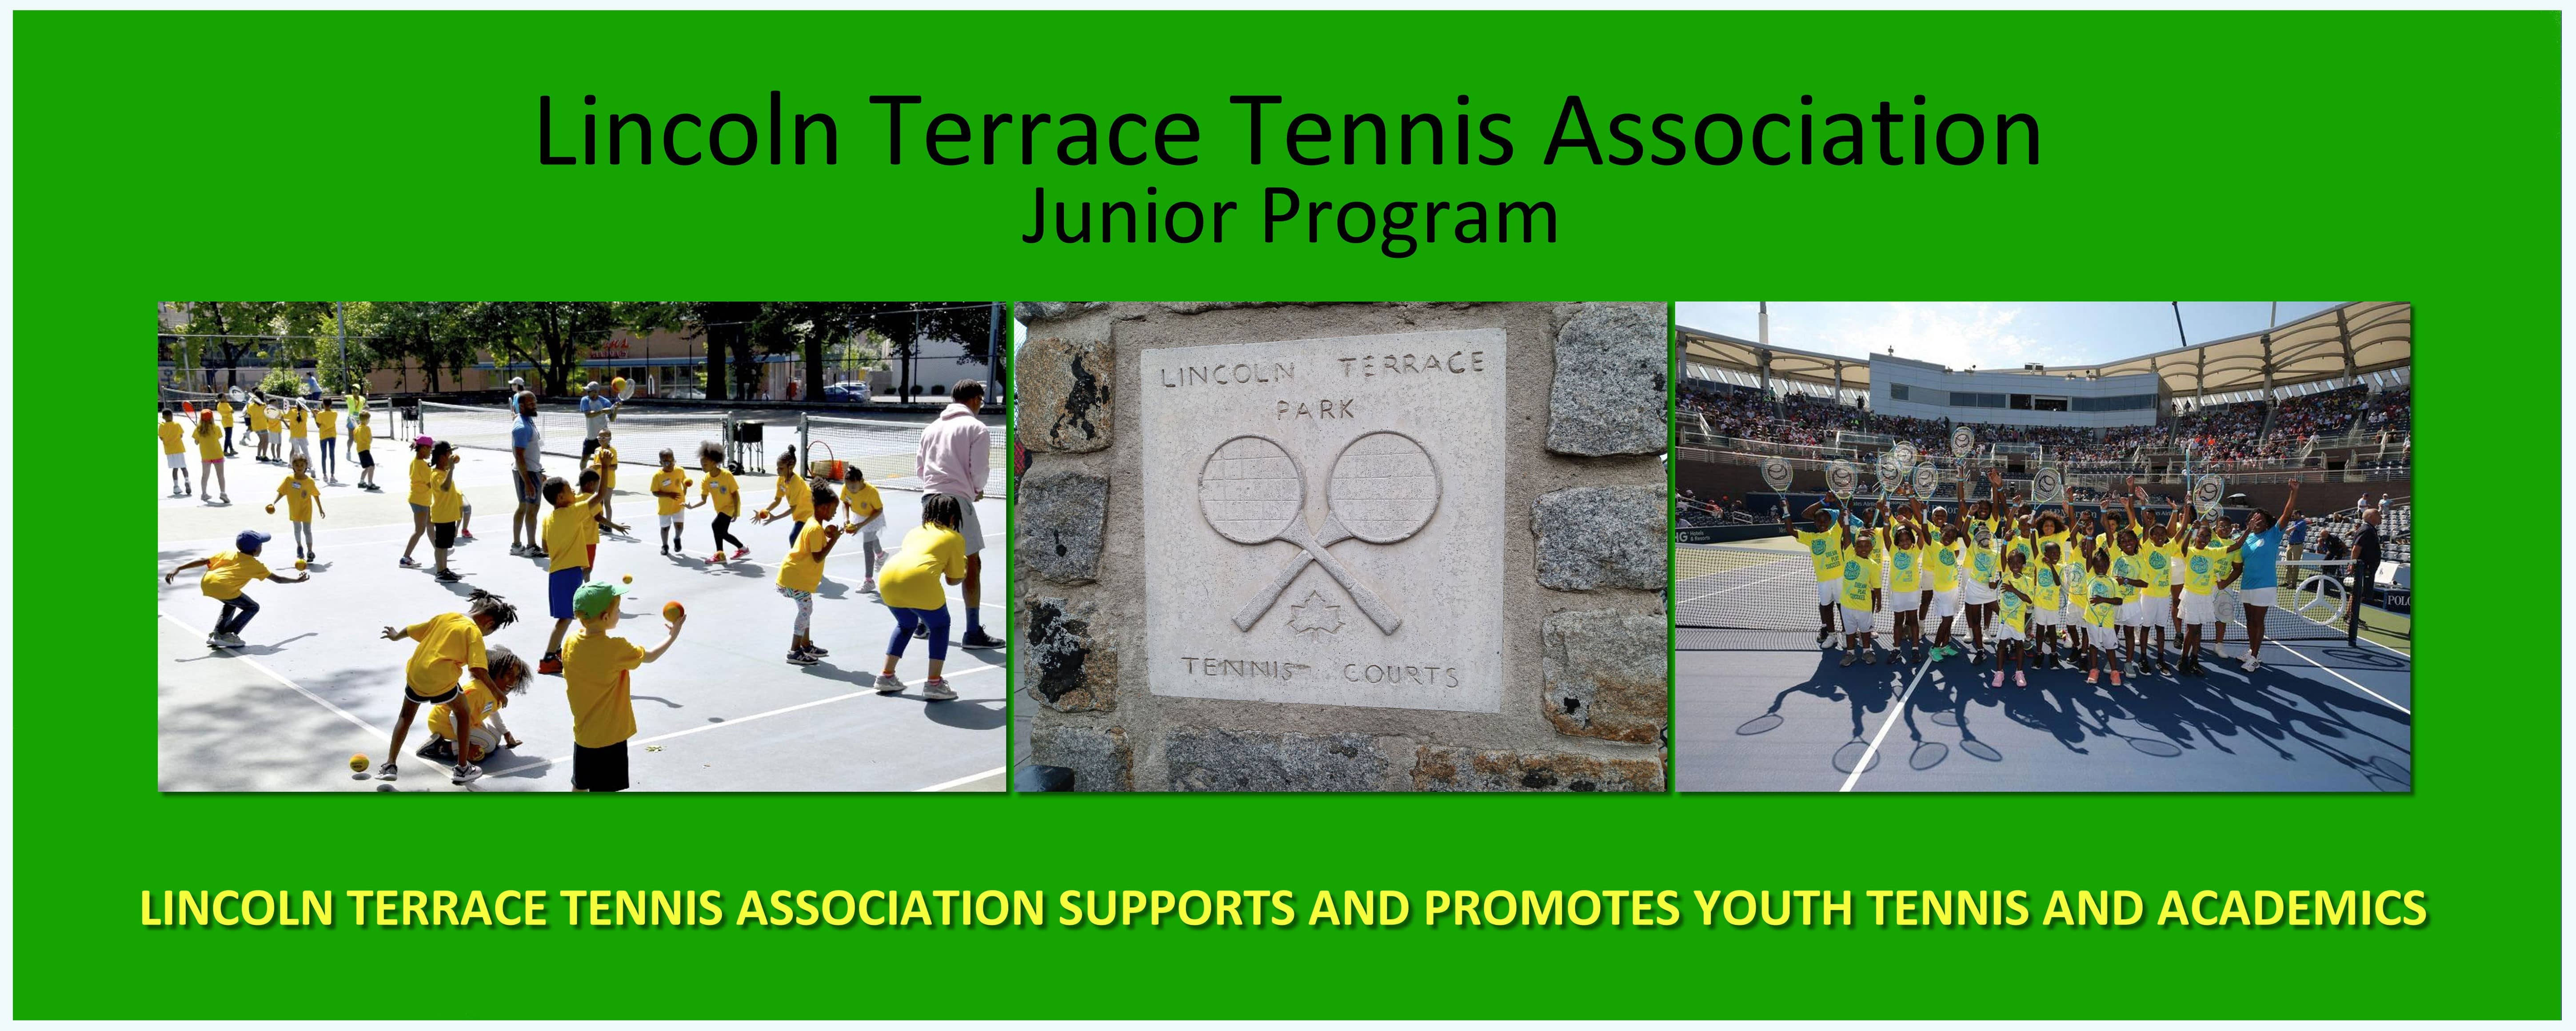 Lincoln Terrace Tennis Association Junior Program